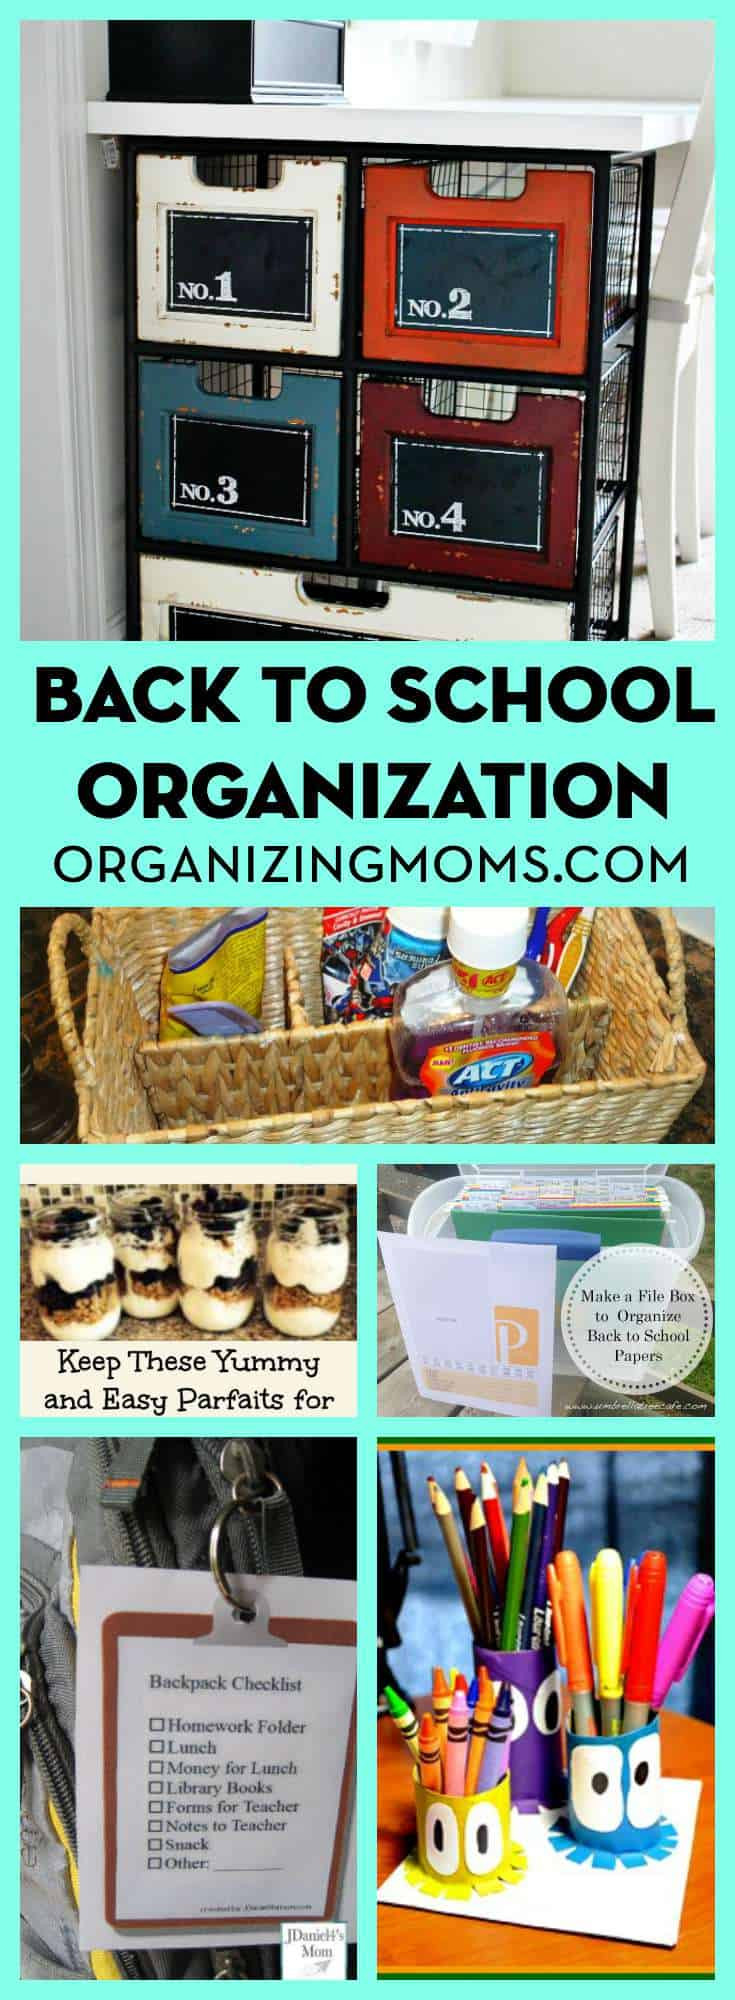 Organization Tips For School
 Back to School Organization Ideas Organizing Moms